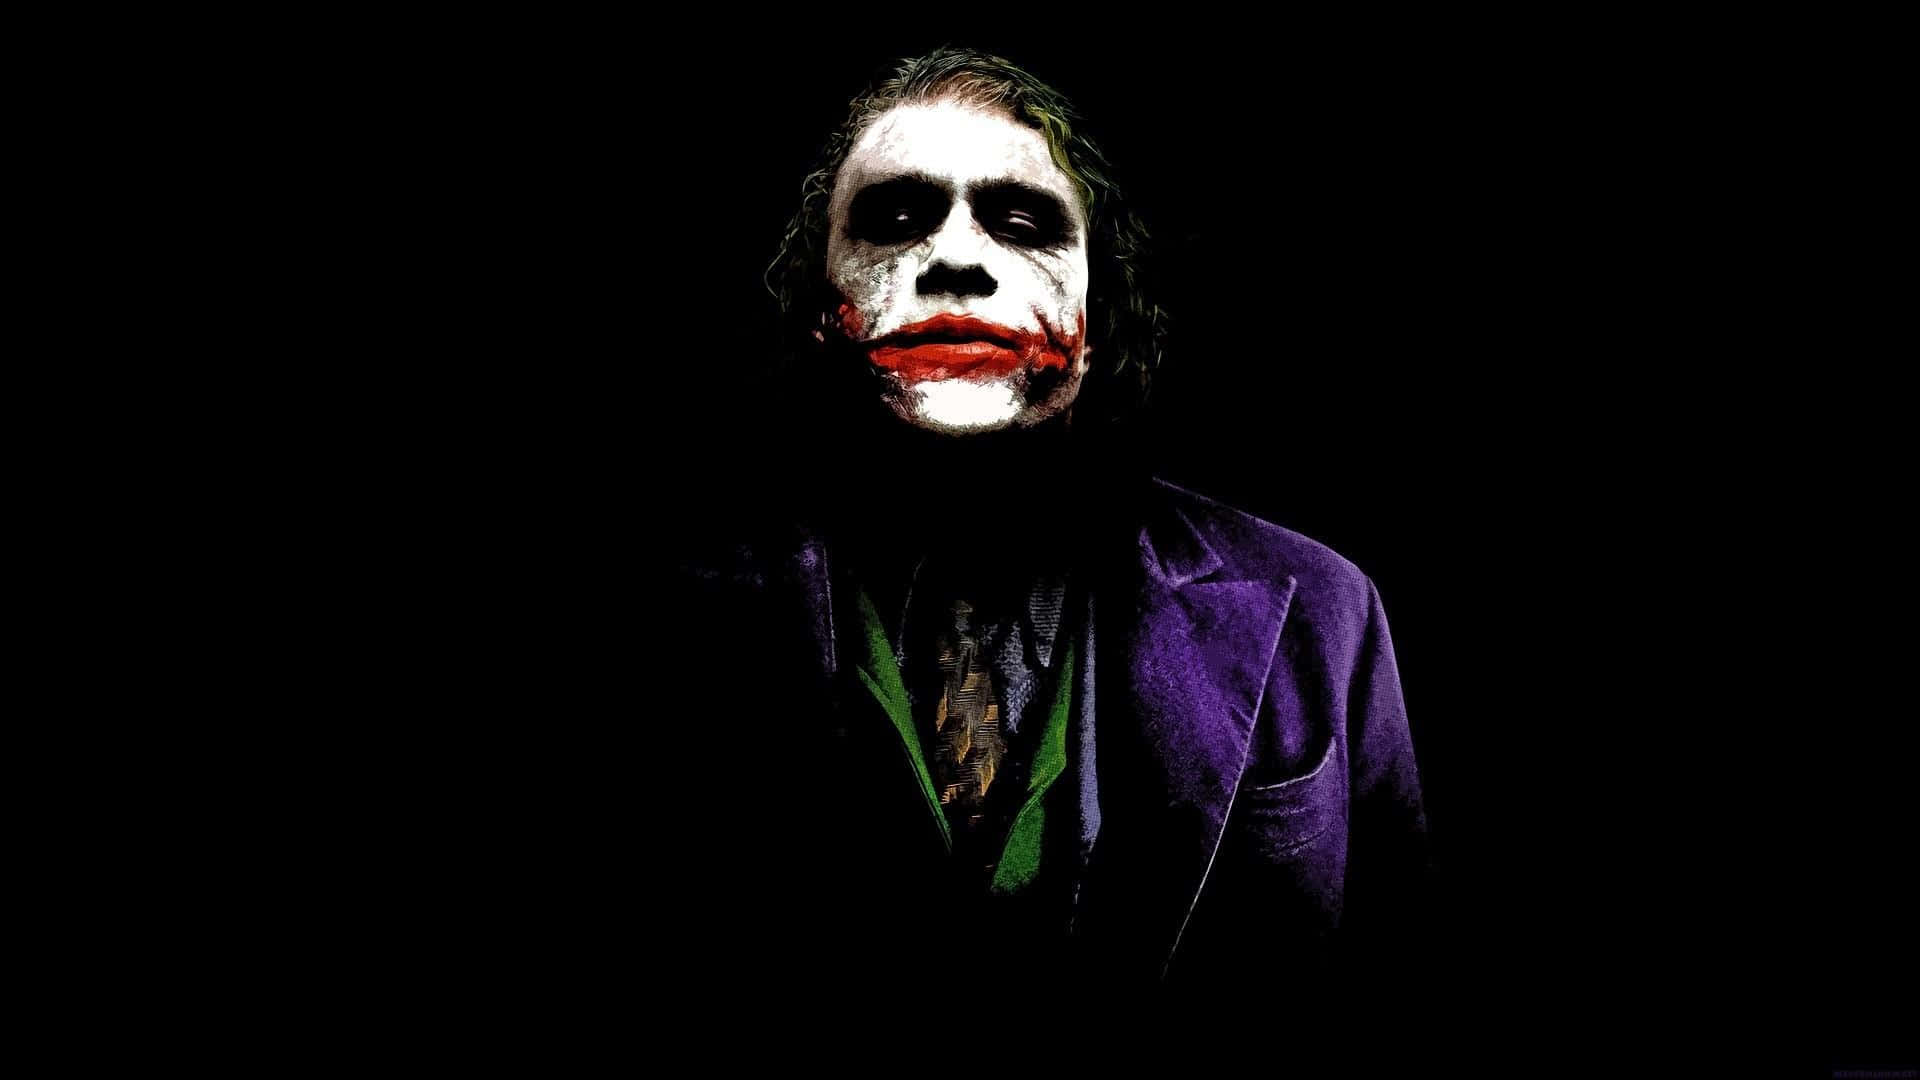 Clowning Around - The iconic Joker Mask